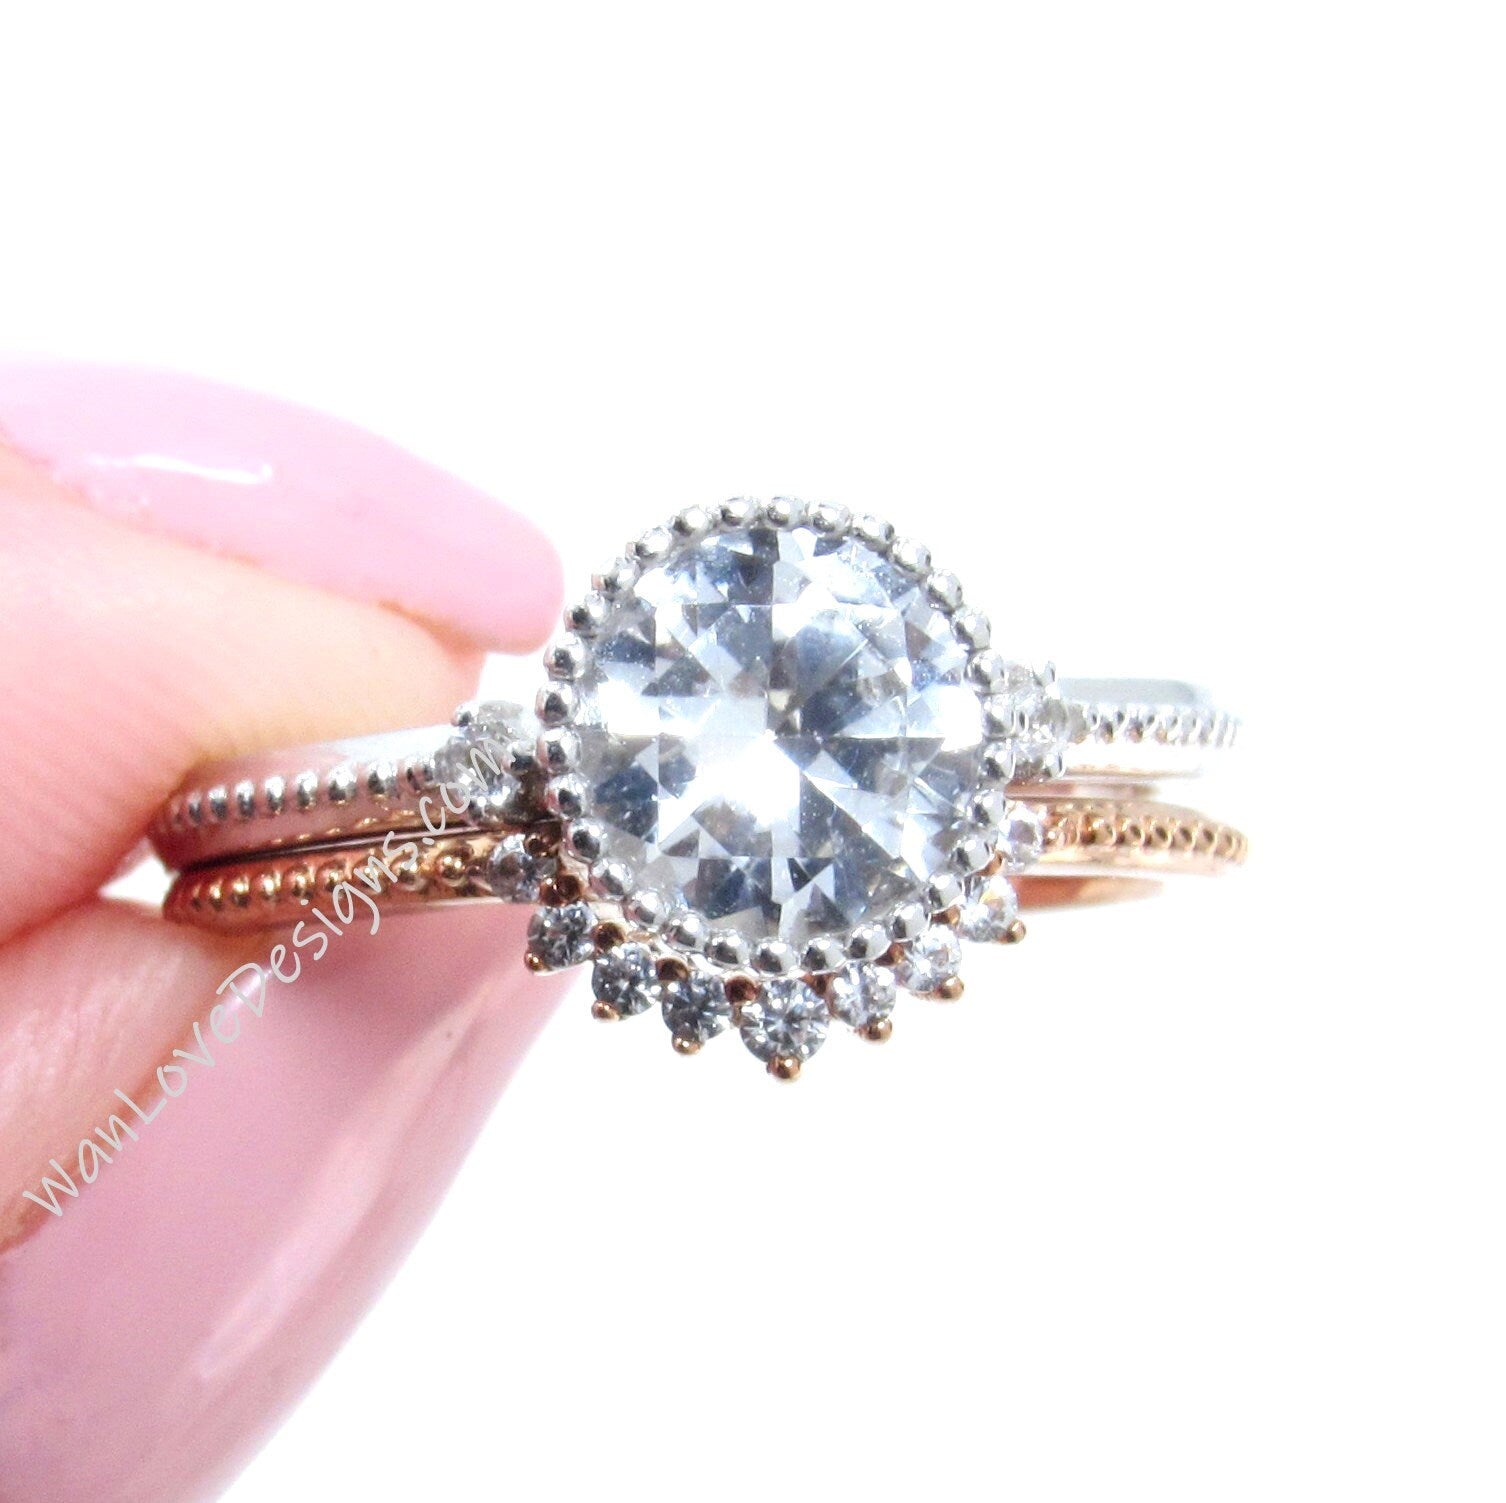 Vintage White Sapphire Engagement Ring Art Deco rose gold Round Migrain Bezel Bridal set Curved Diamond wedding band Anniversary ring